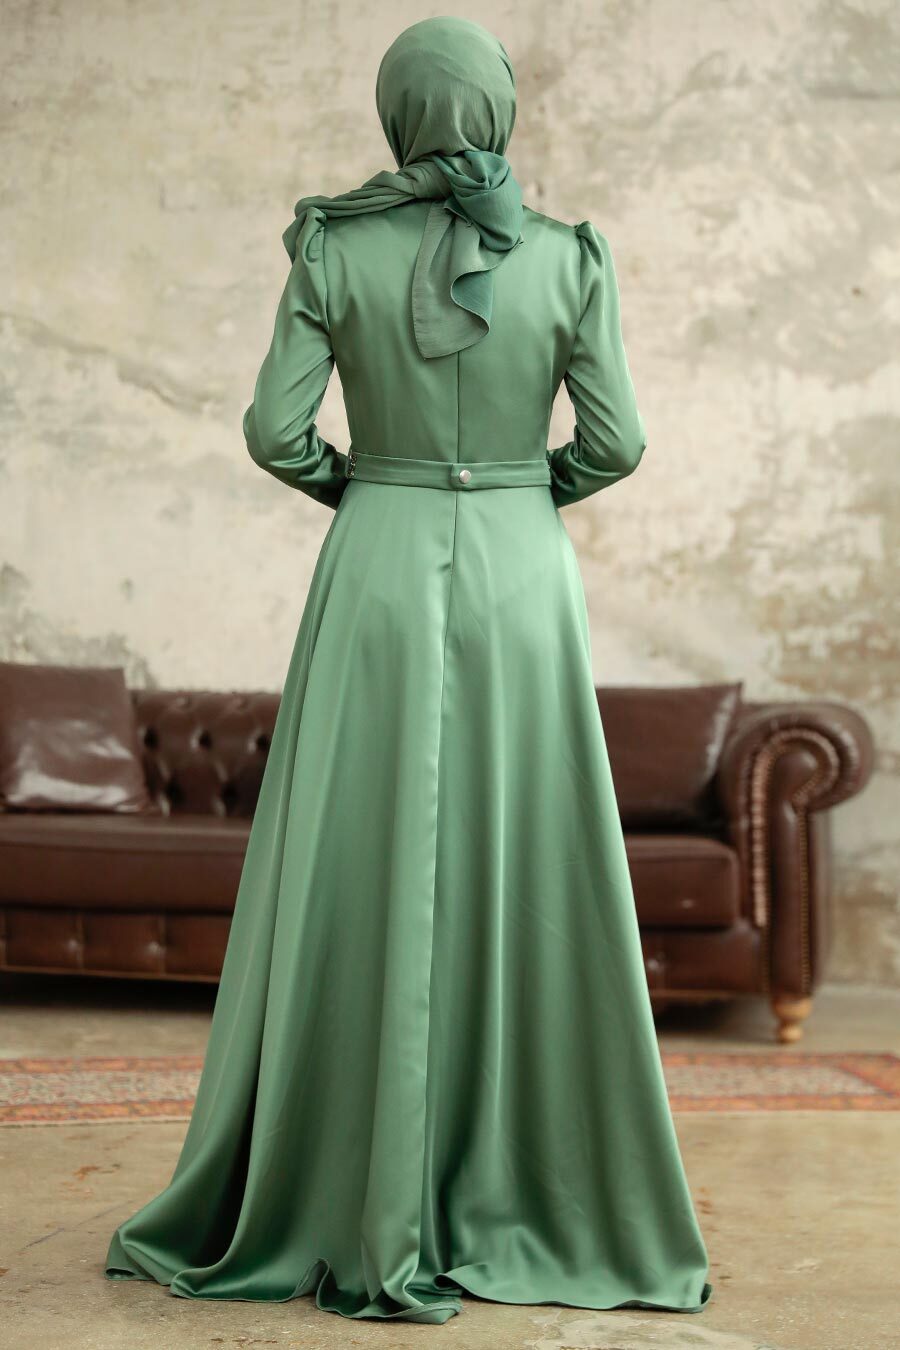 Neva Style - Satin Almond Green Islamic Wedding Dress 3967CY